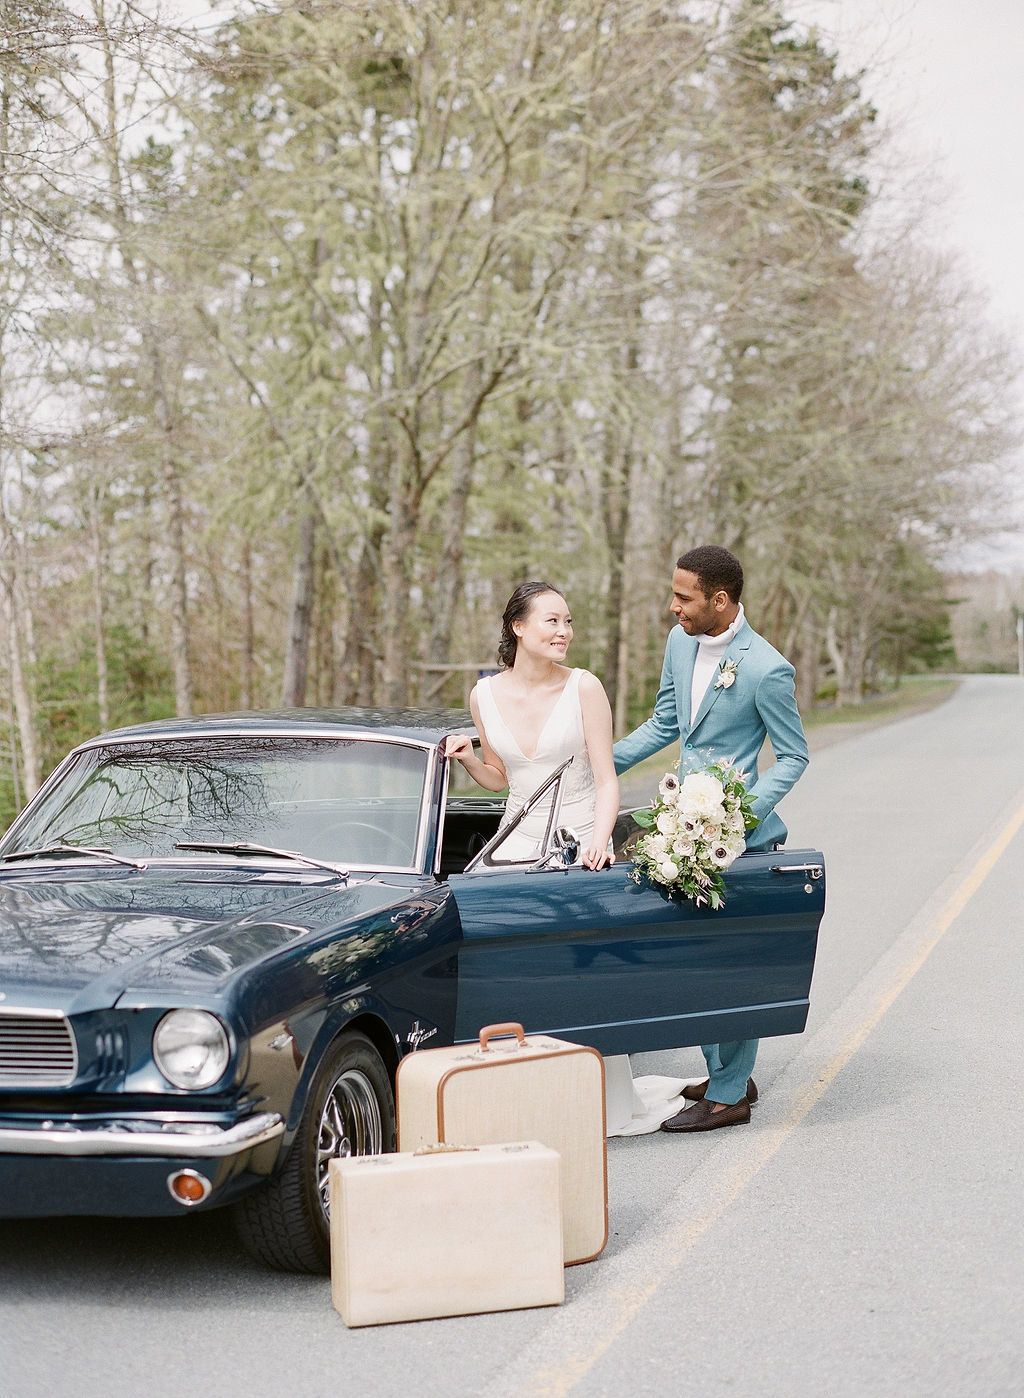 Jacqueline Anne Photography, The One Day Workshop, Halifax Wedding Photographer, Vintage Car